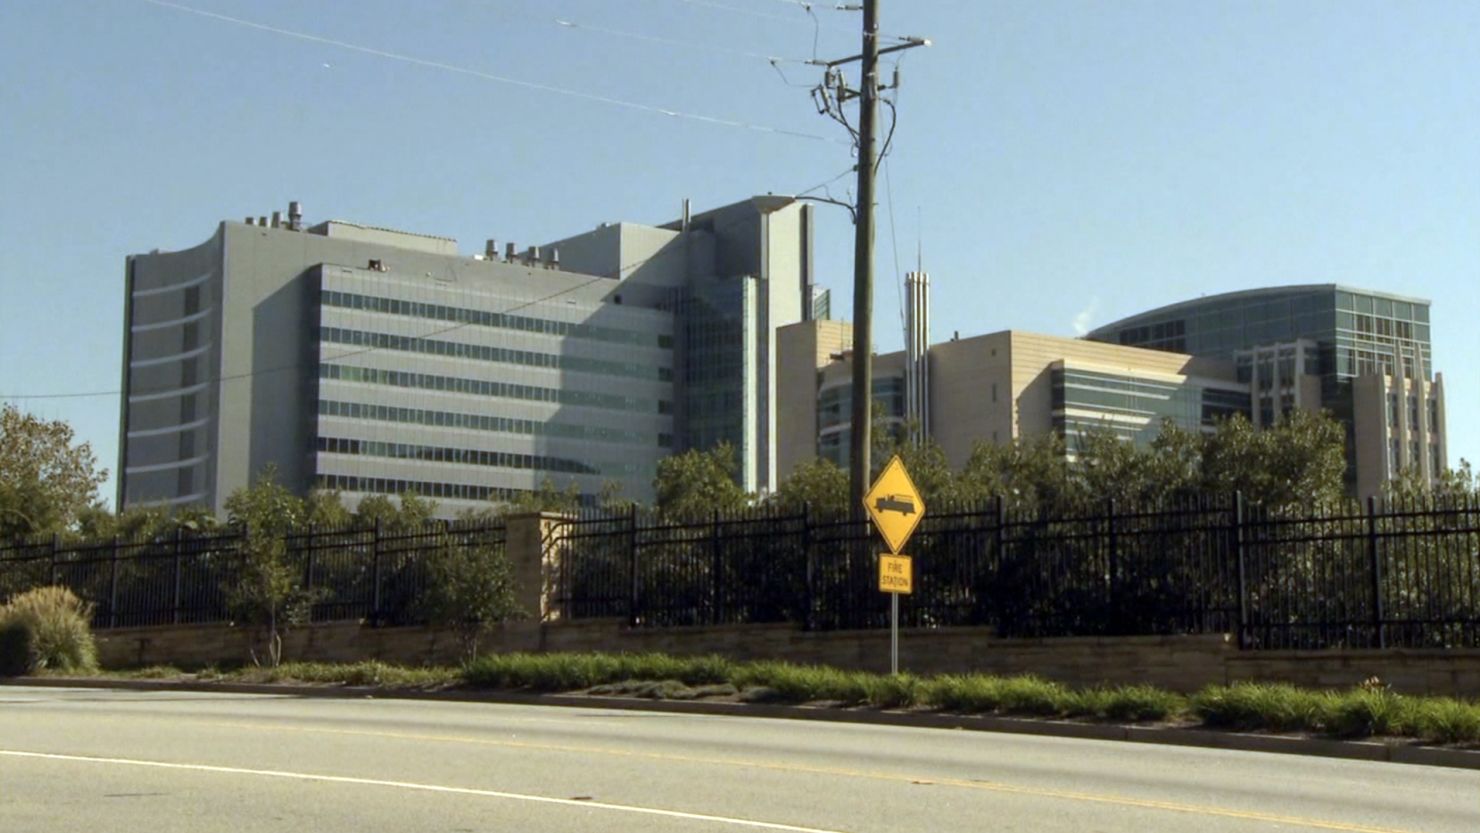 The CDC building in Atlanta, Georgia.